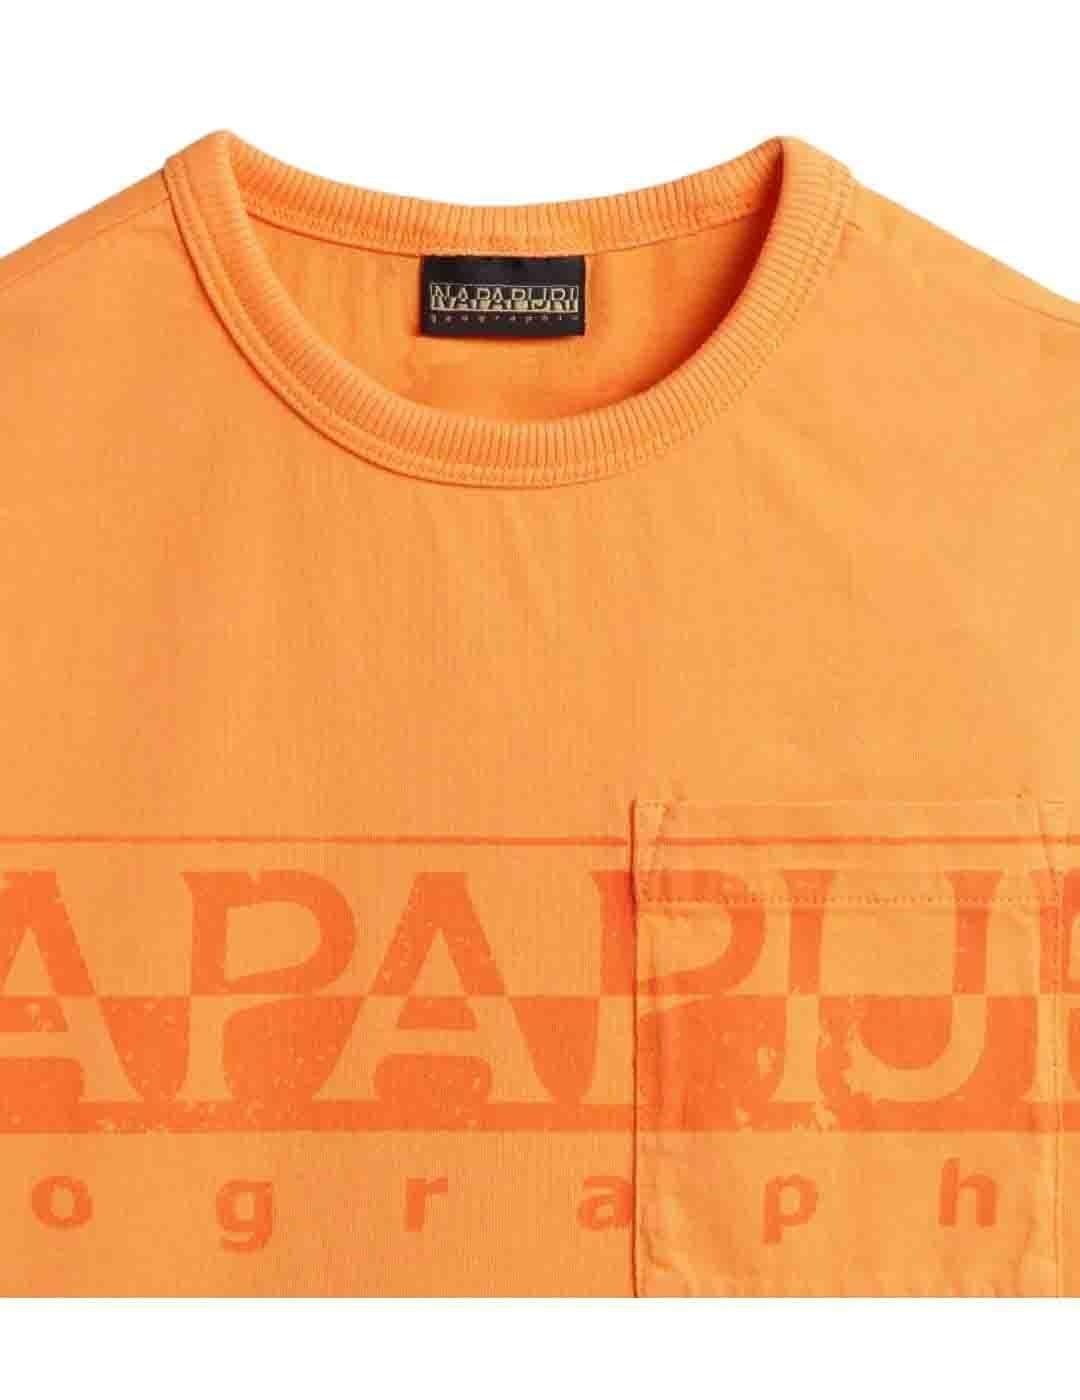 Camiseta Napapijri Saleina de cuello redondo y manga corta